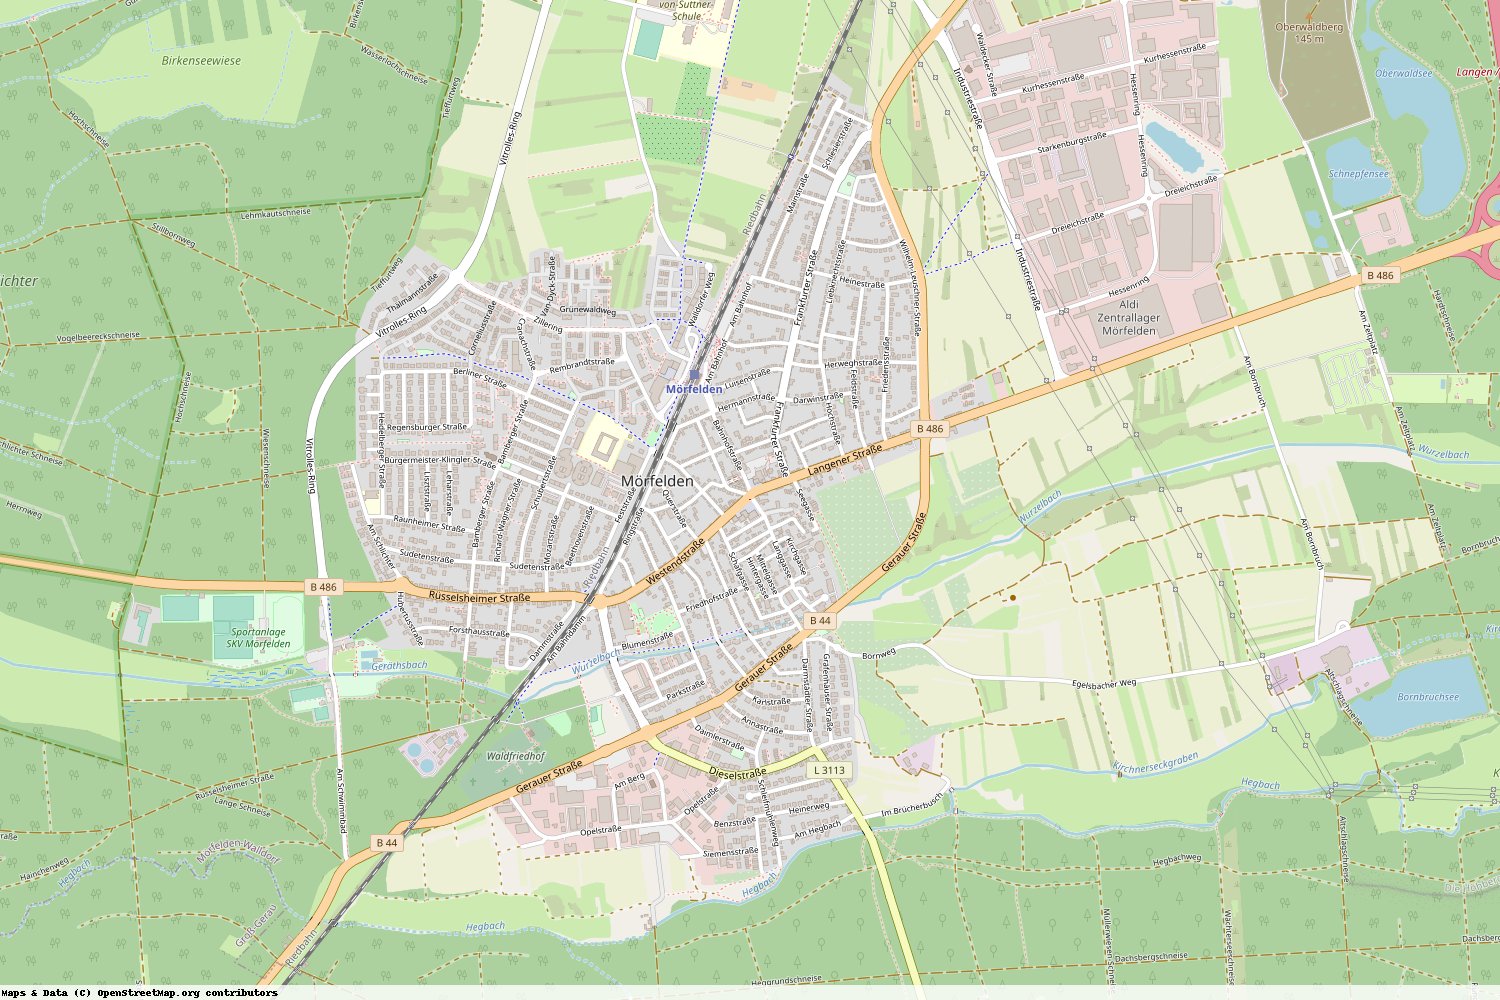 Ist gerade Stromausfall in Hessen - Groß-Gerau - Mörfelden-Walldorf?